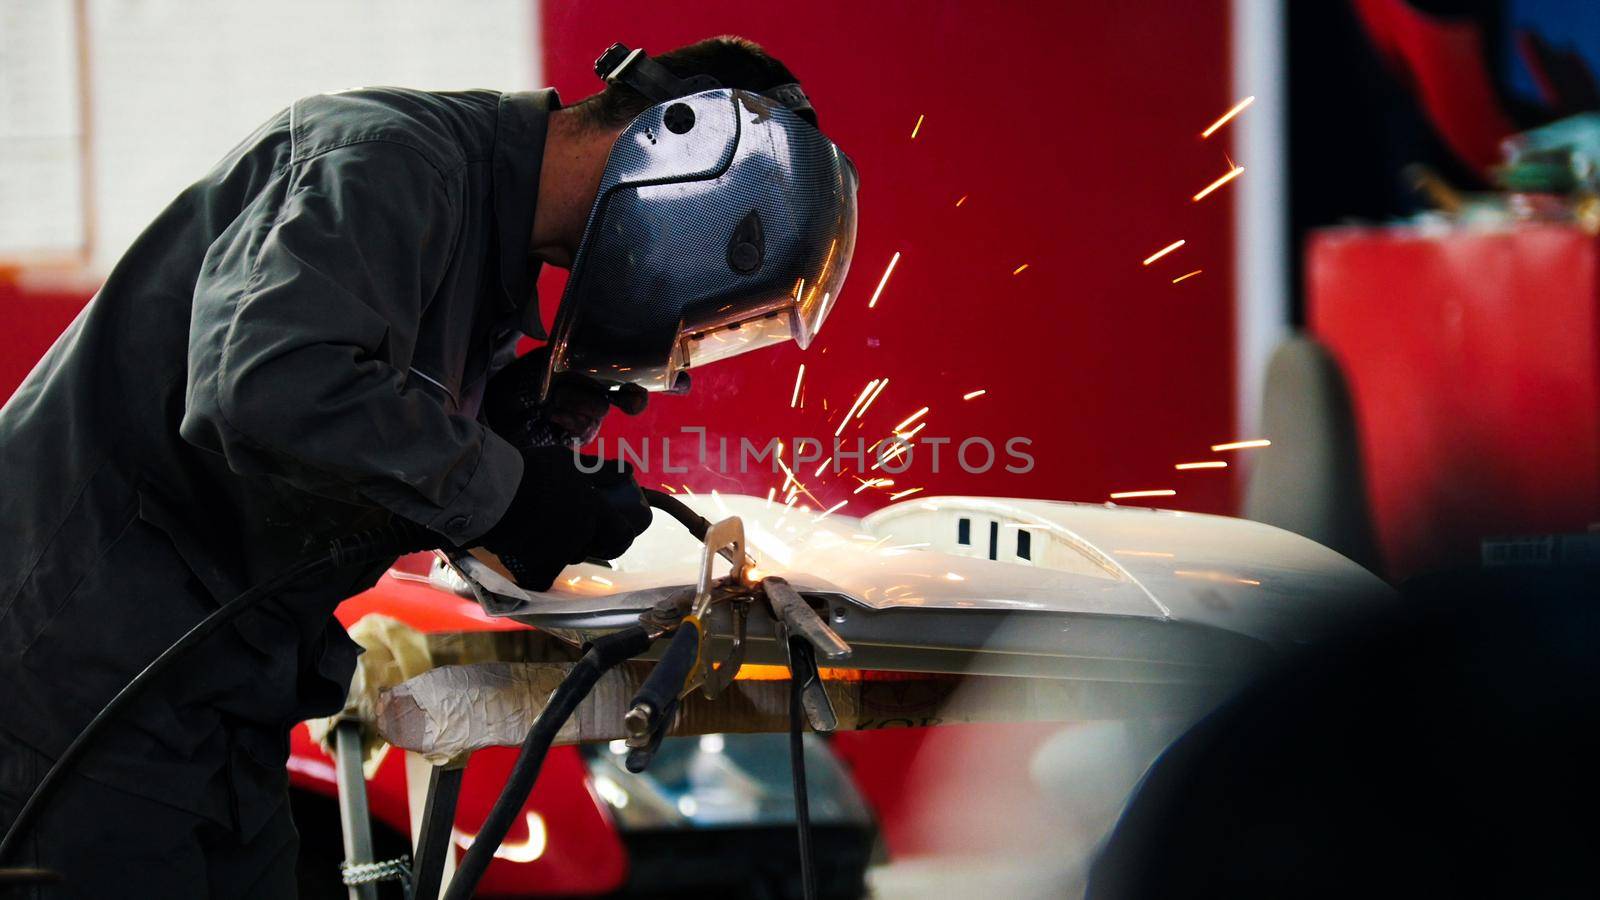 Welding industrial: worker in helmet repair detail in car auto service, telephoto